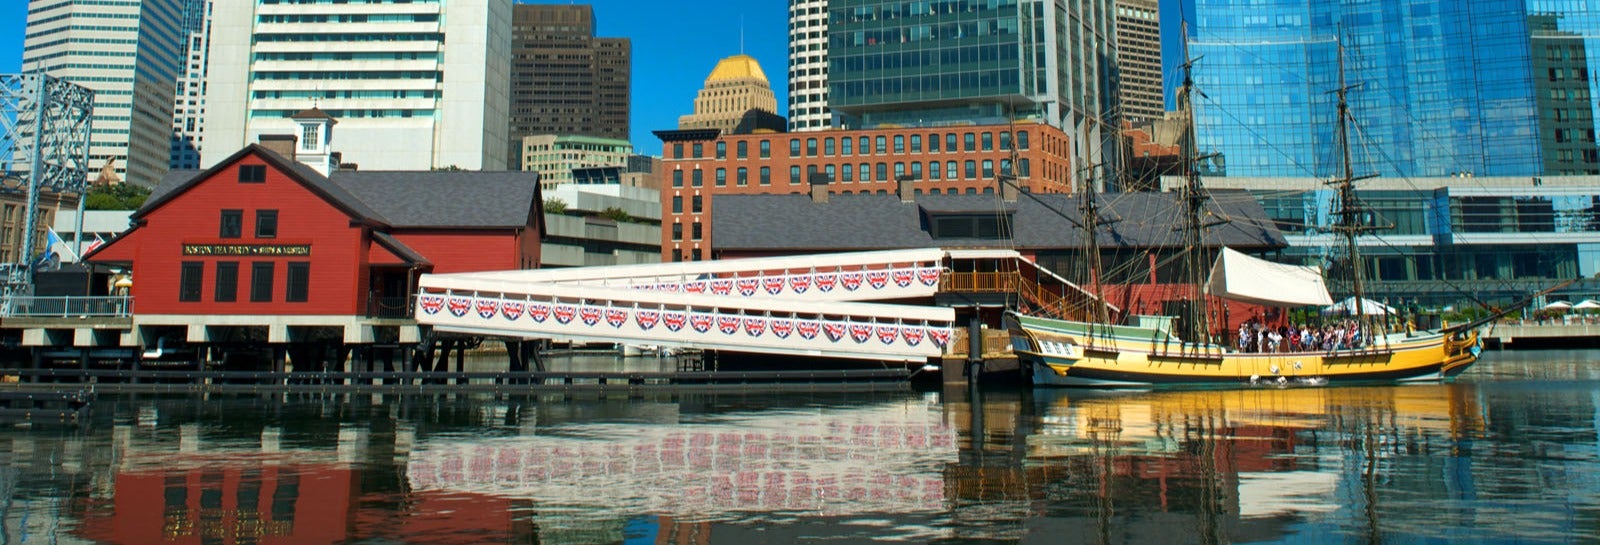 Boston Tea Party Ships & Museum Ticket